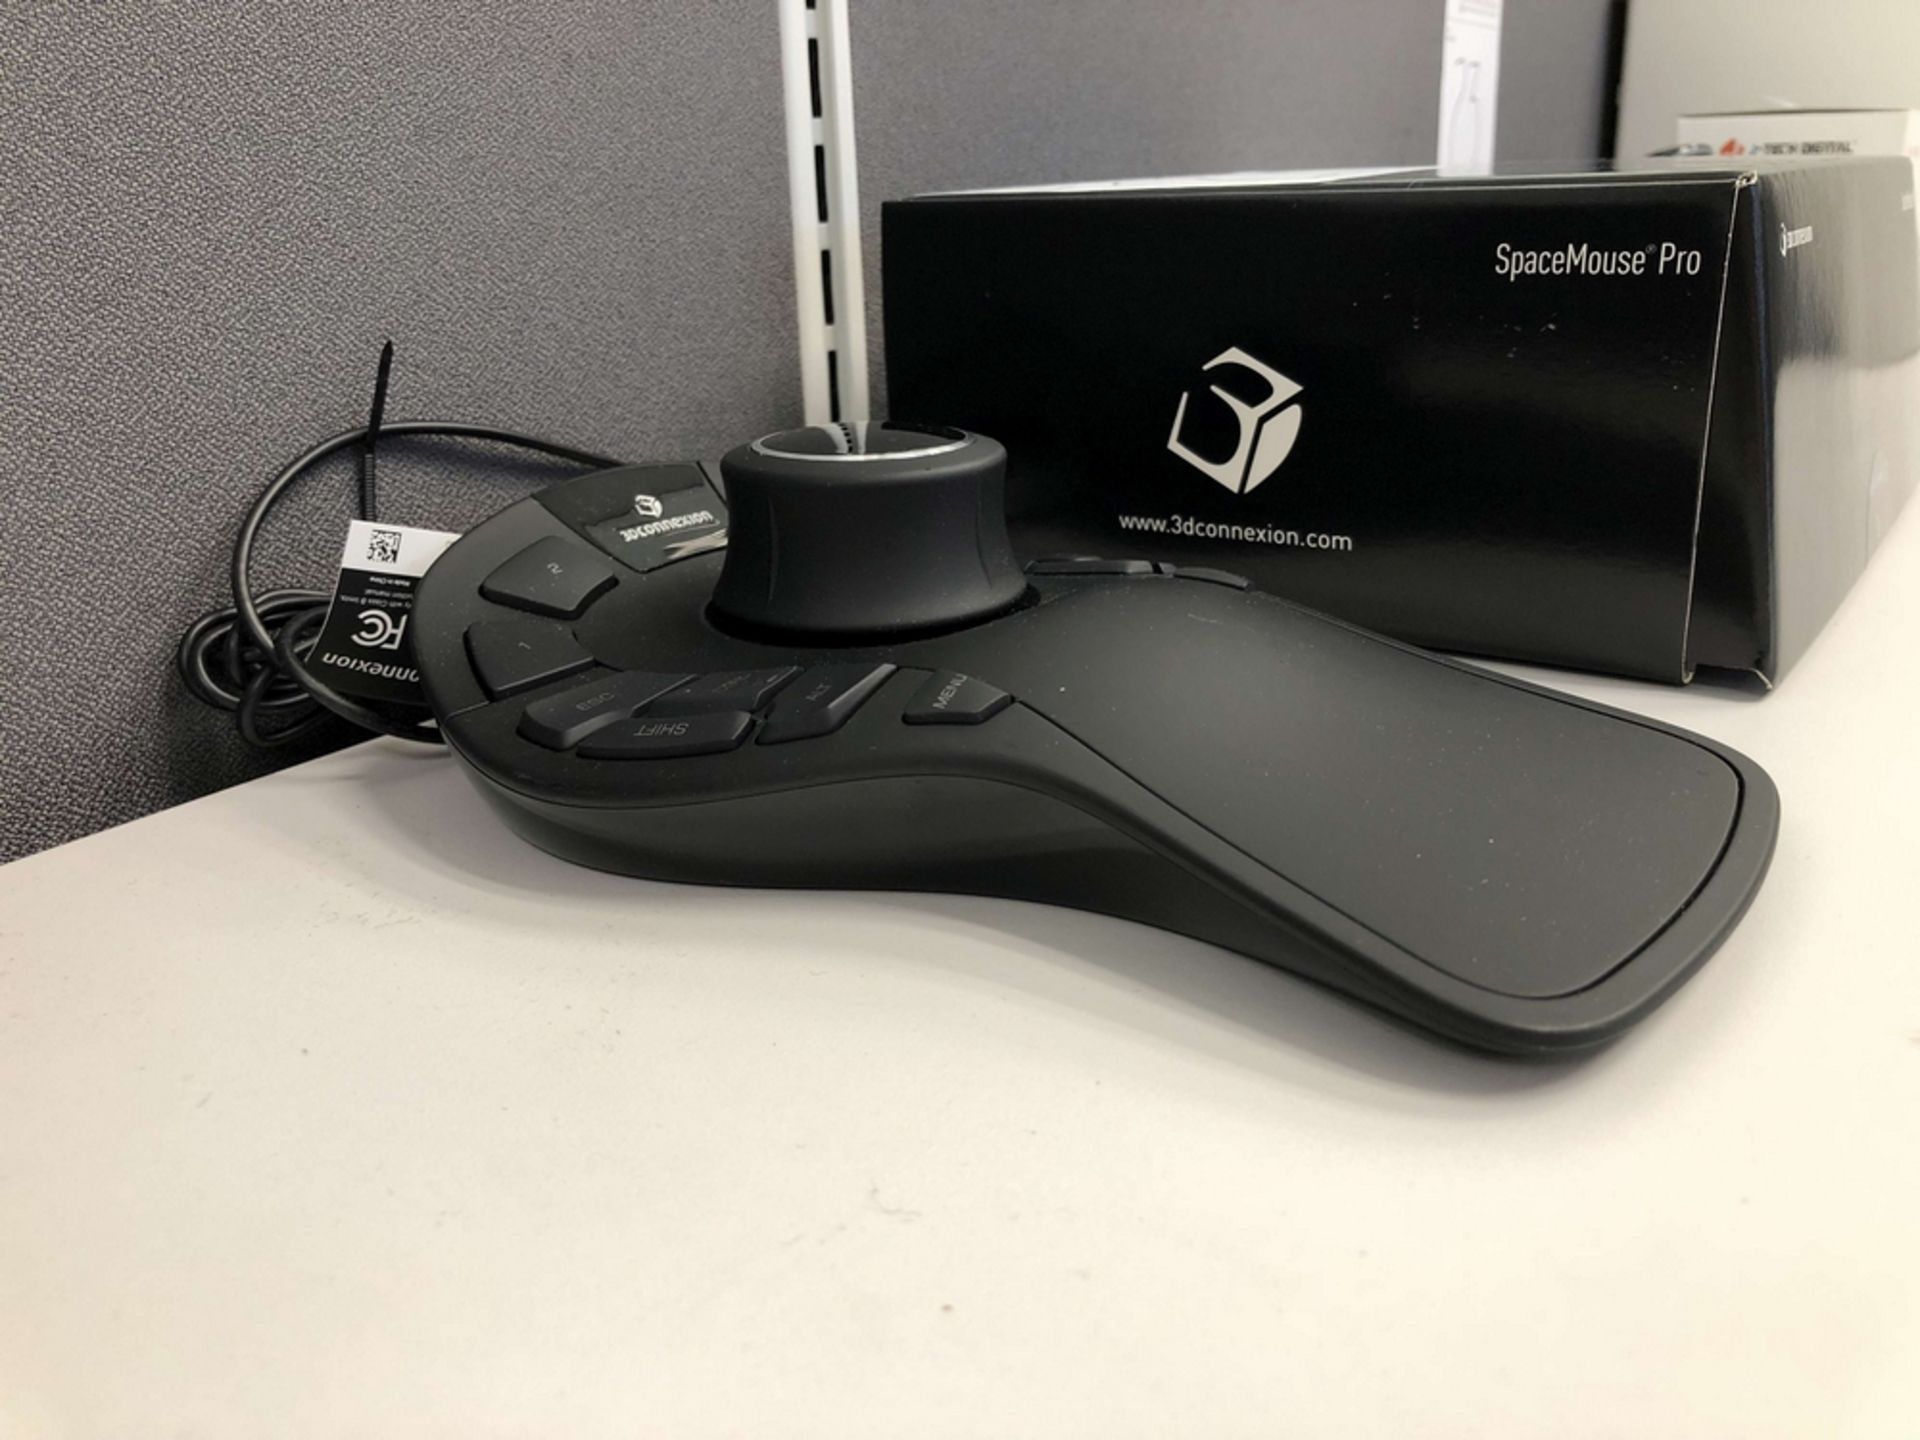 3DConnexion SpaceMouse Pro 3D Mouse - Image 2 of 2